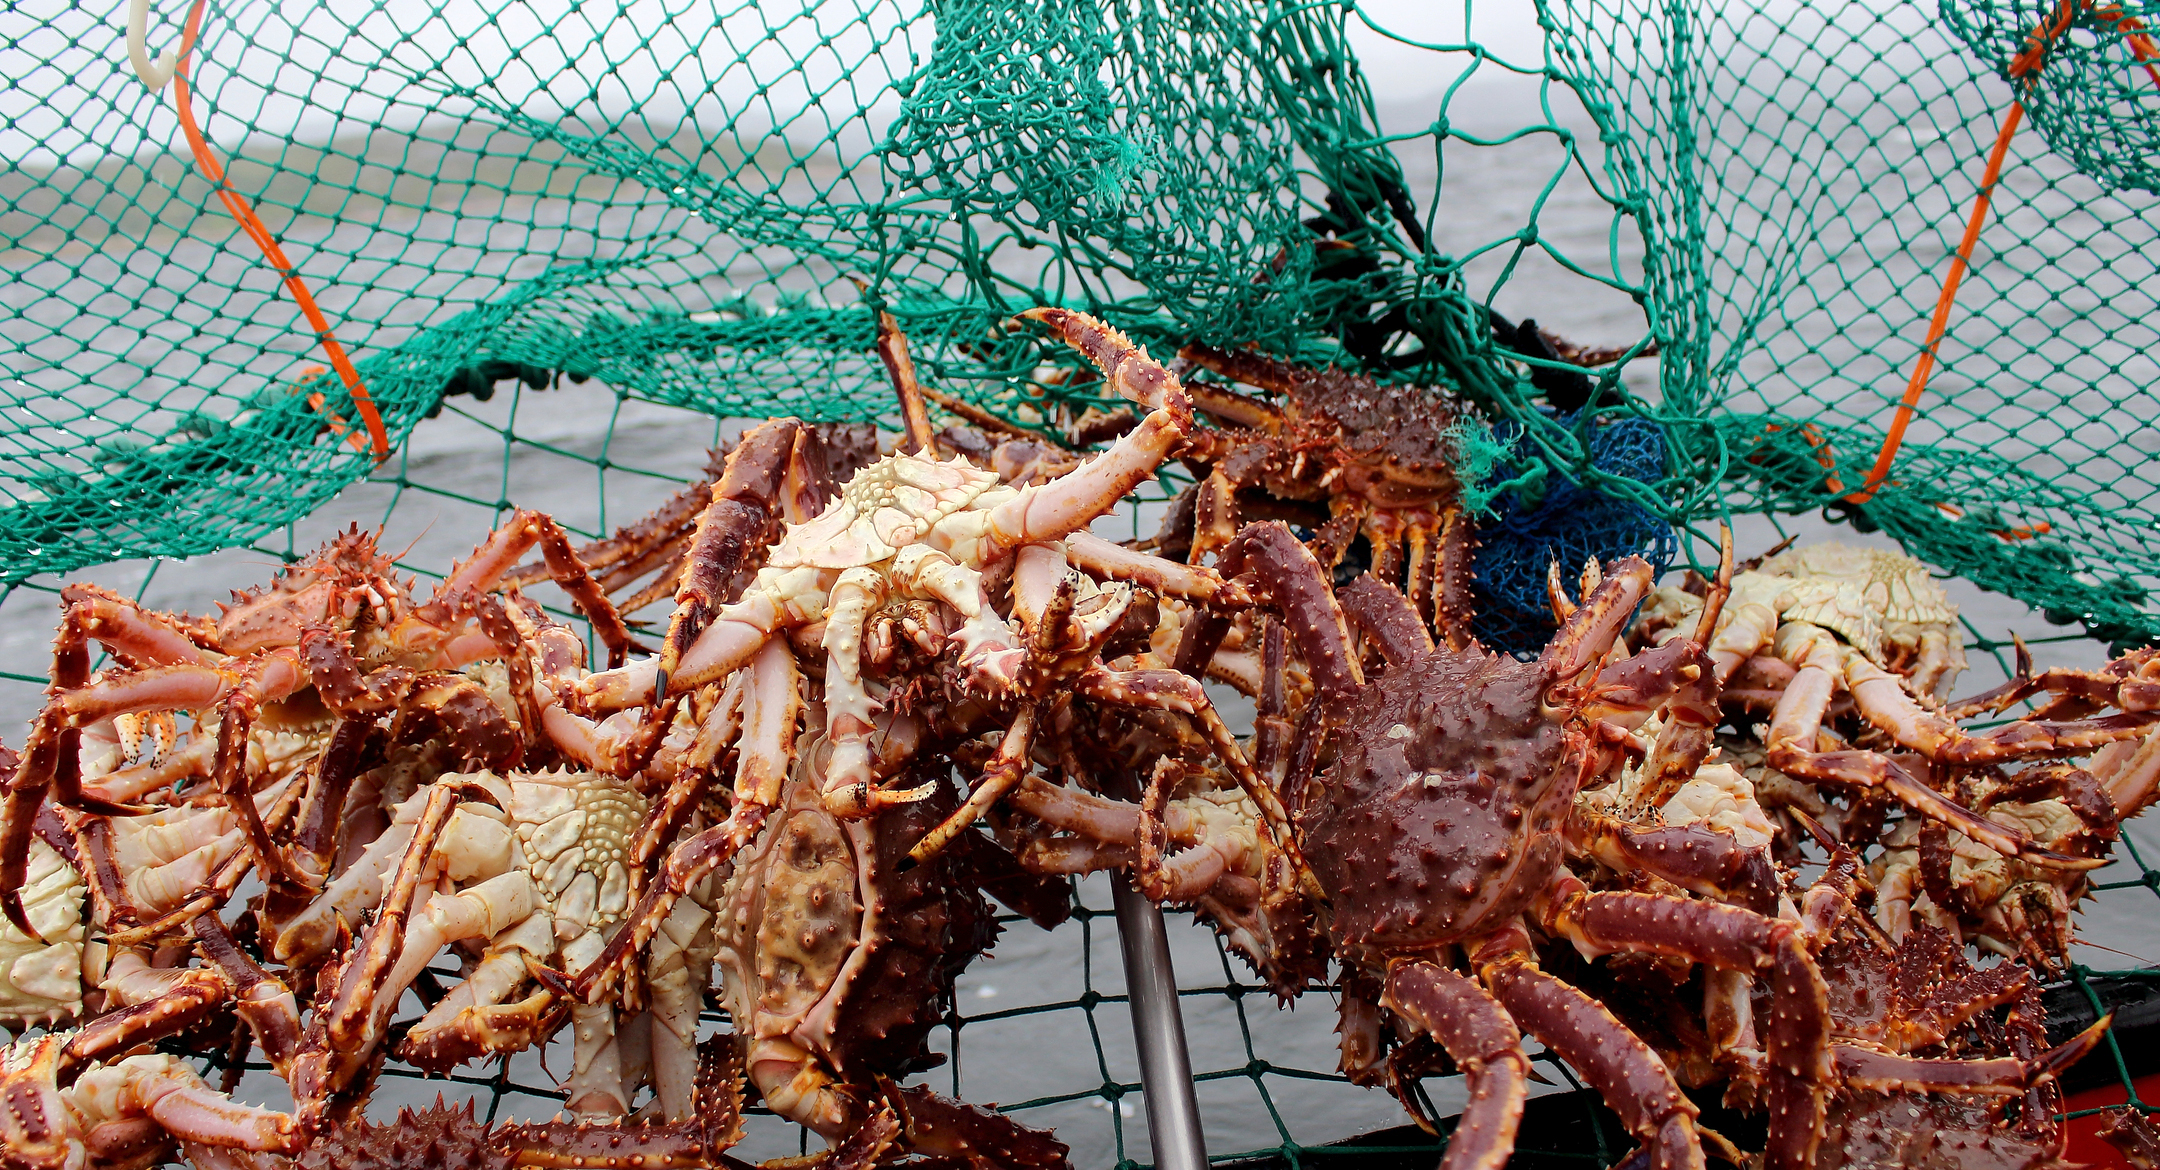 King crab monopoly has Norwegian fishers in gold rush